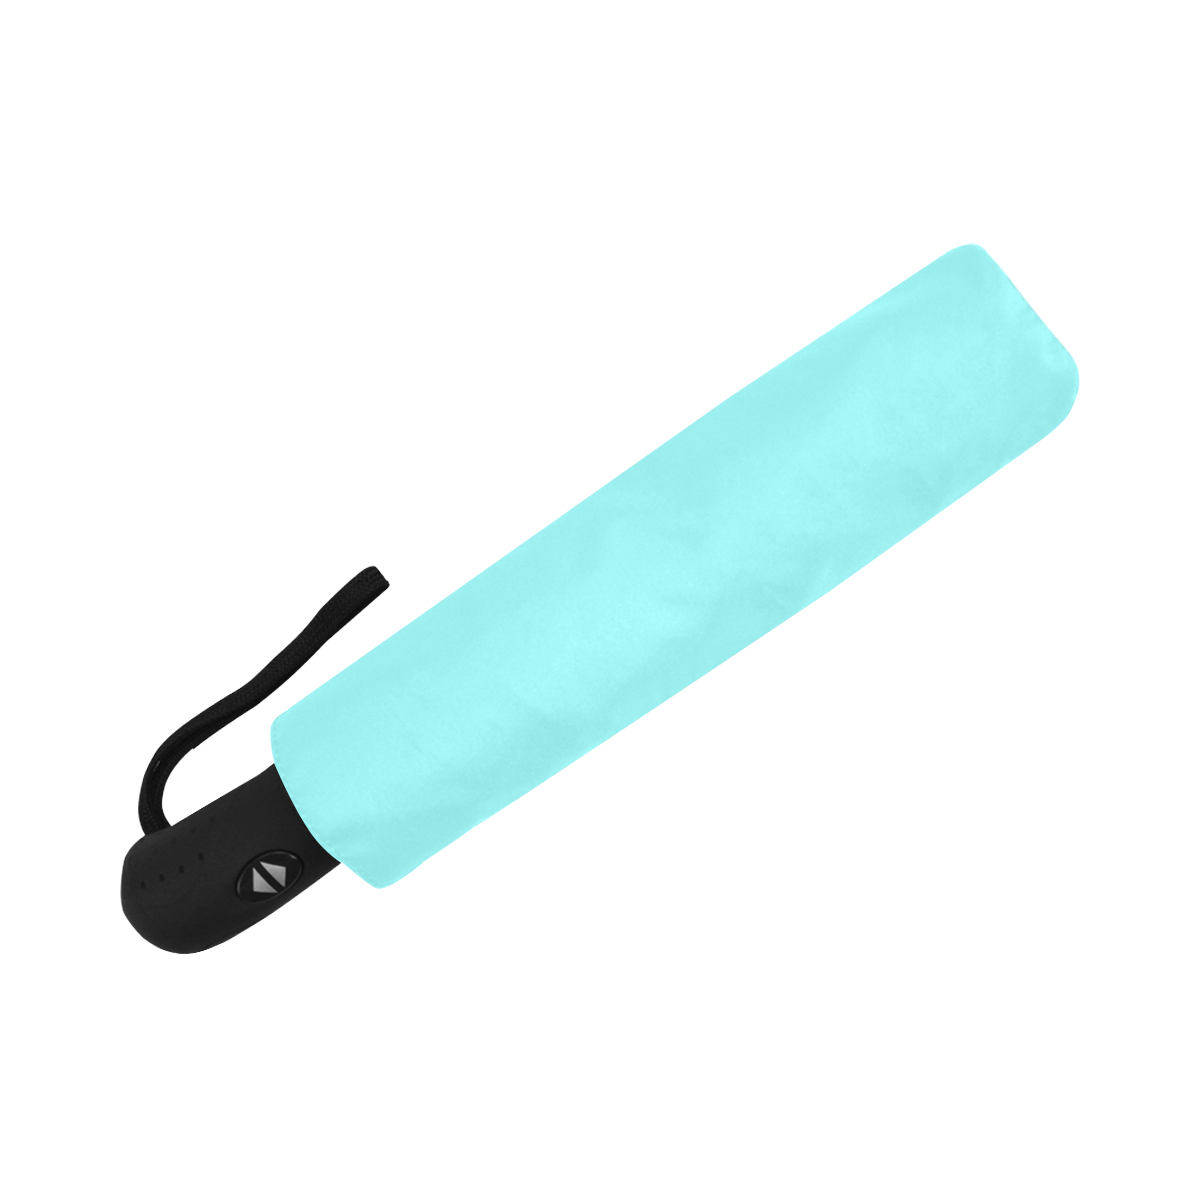 color ice blue Anti-UV Auto-Foldable Umbrella (U09)